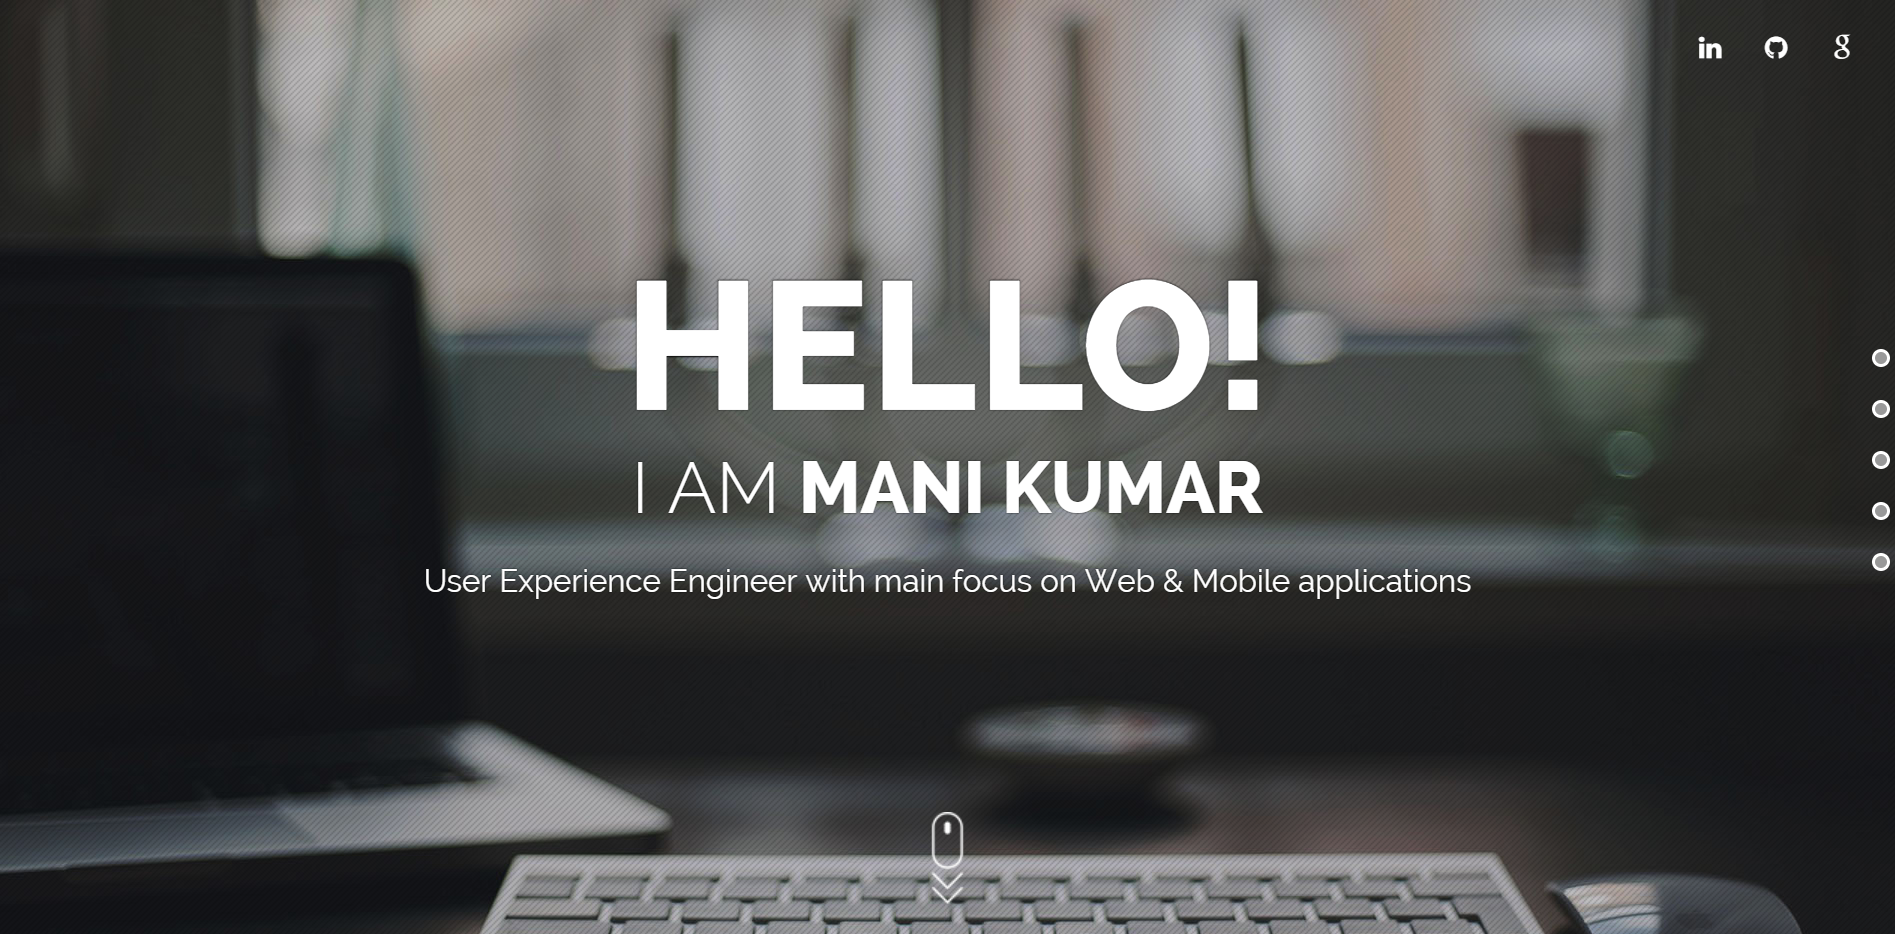 Mani Kumar's UX Engineer portfolio